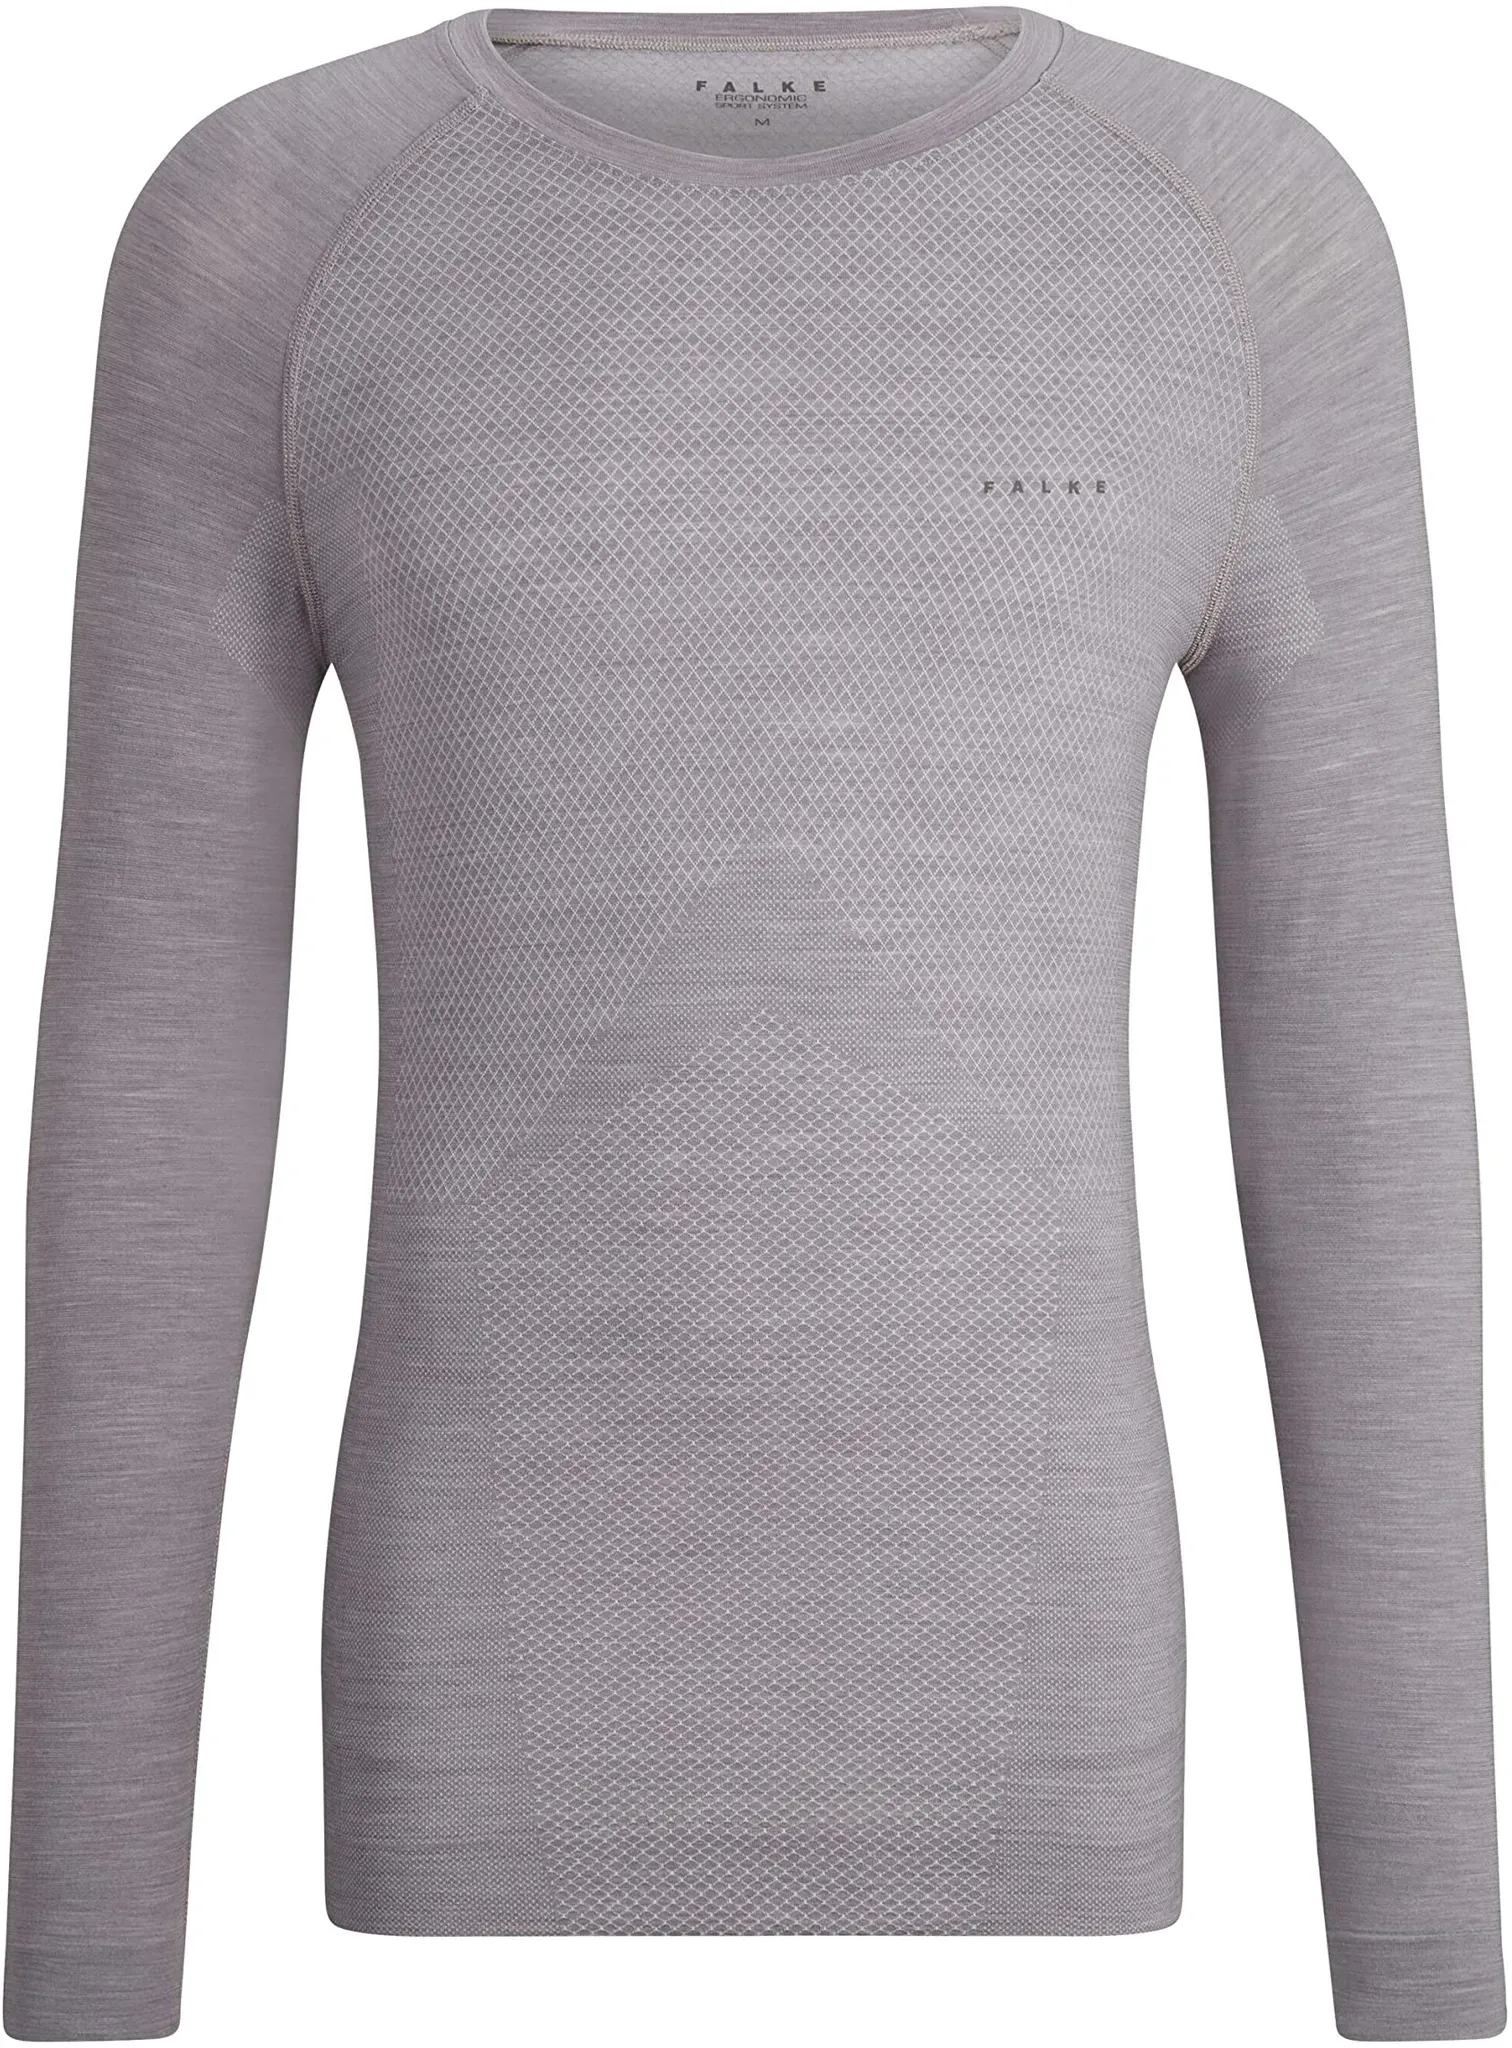 FALKE Herren Baselayer-Shirt Wool-Tech Light Round Neck M L/S SH Wolle Schnelltrocknend 1 Stück, Grau (Grey-Heather 3757), M